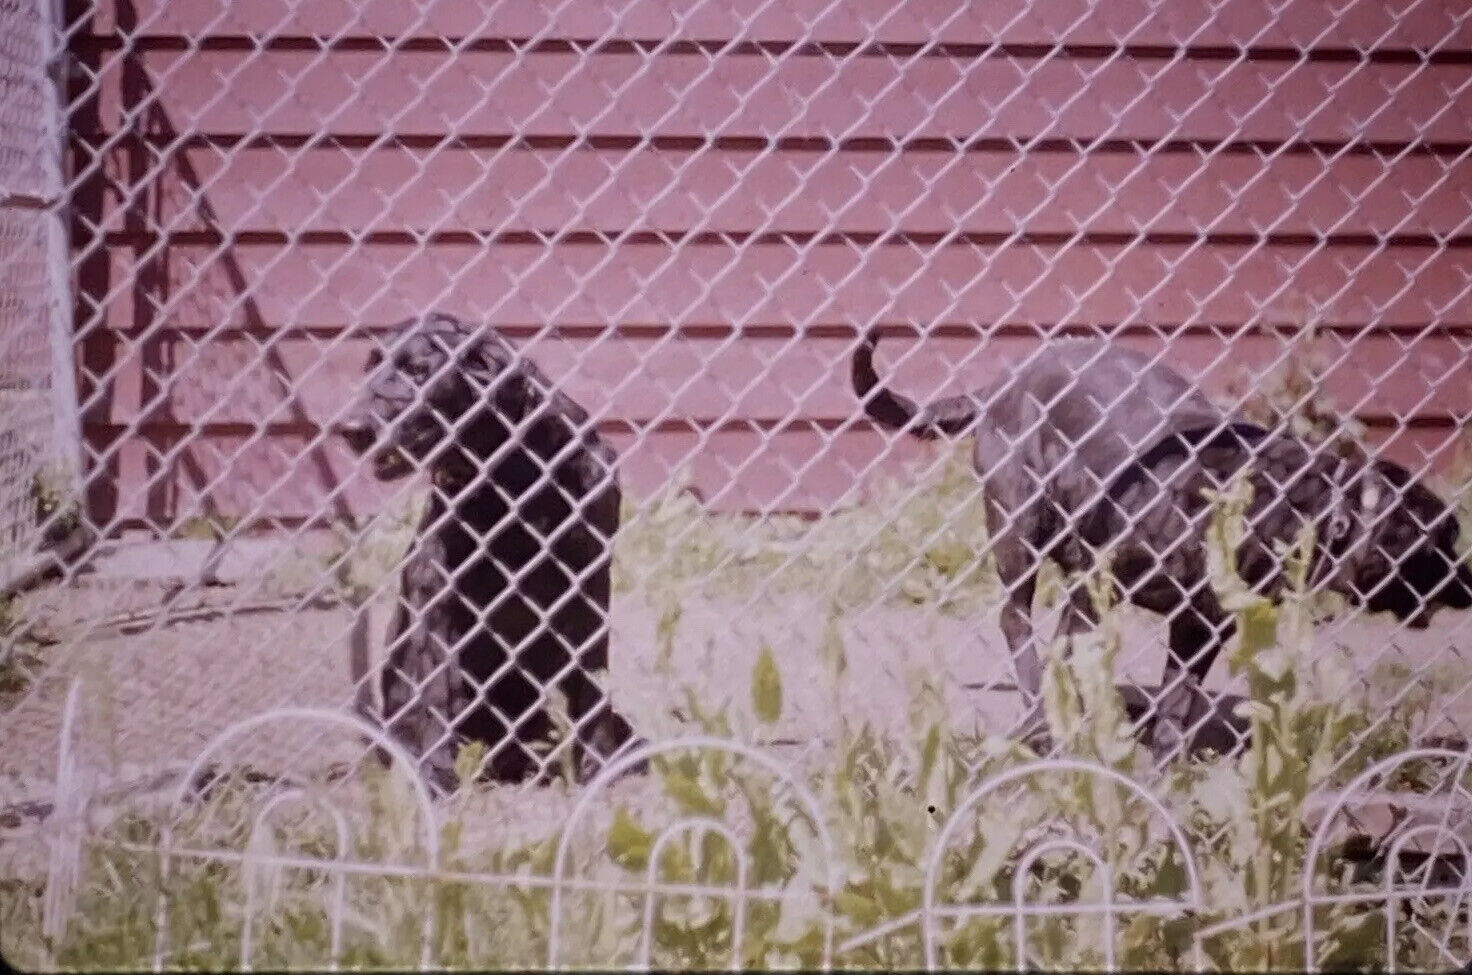 Vintage Photo Slide 1988 Black Dogs Behind Fence Yard